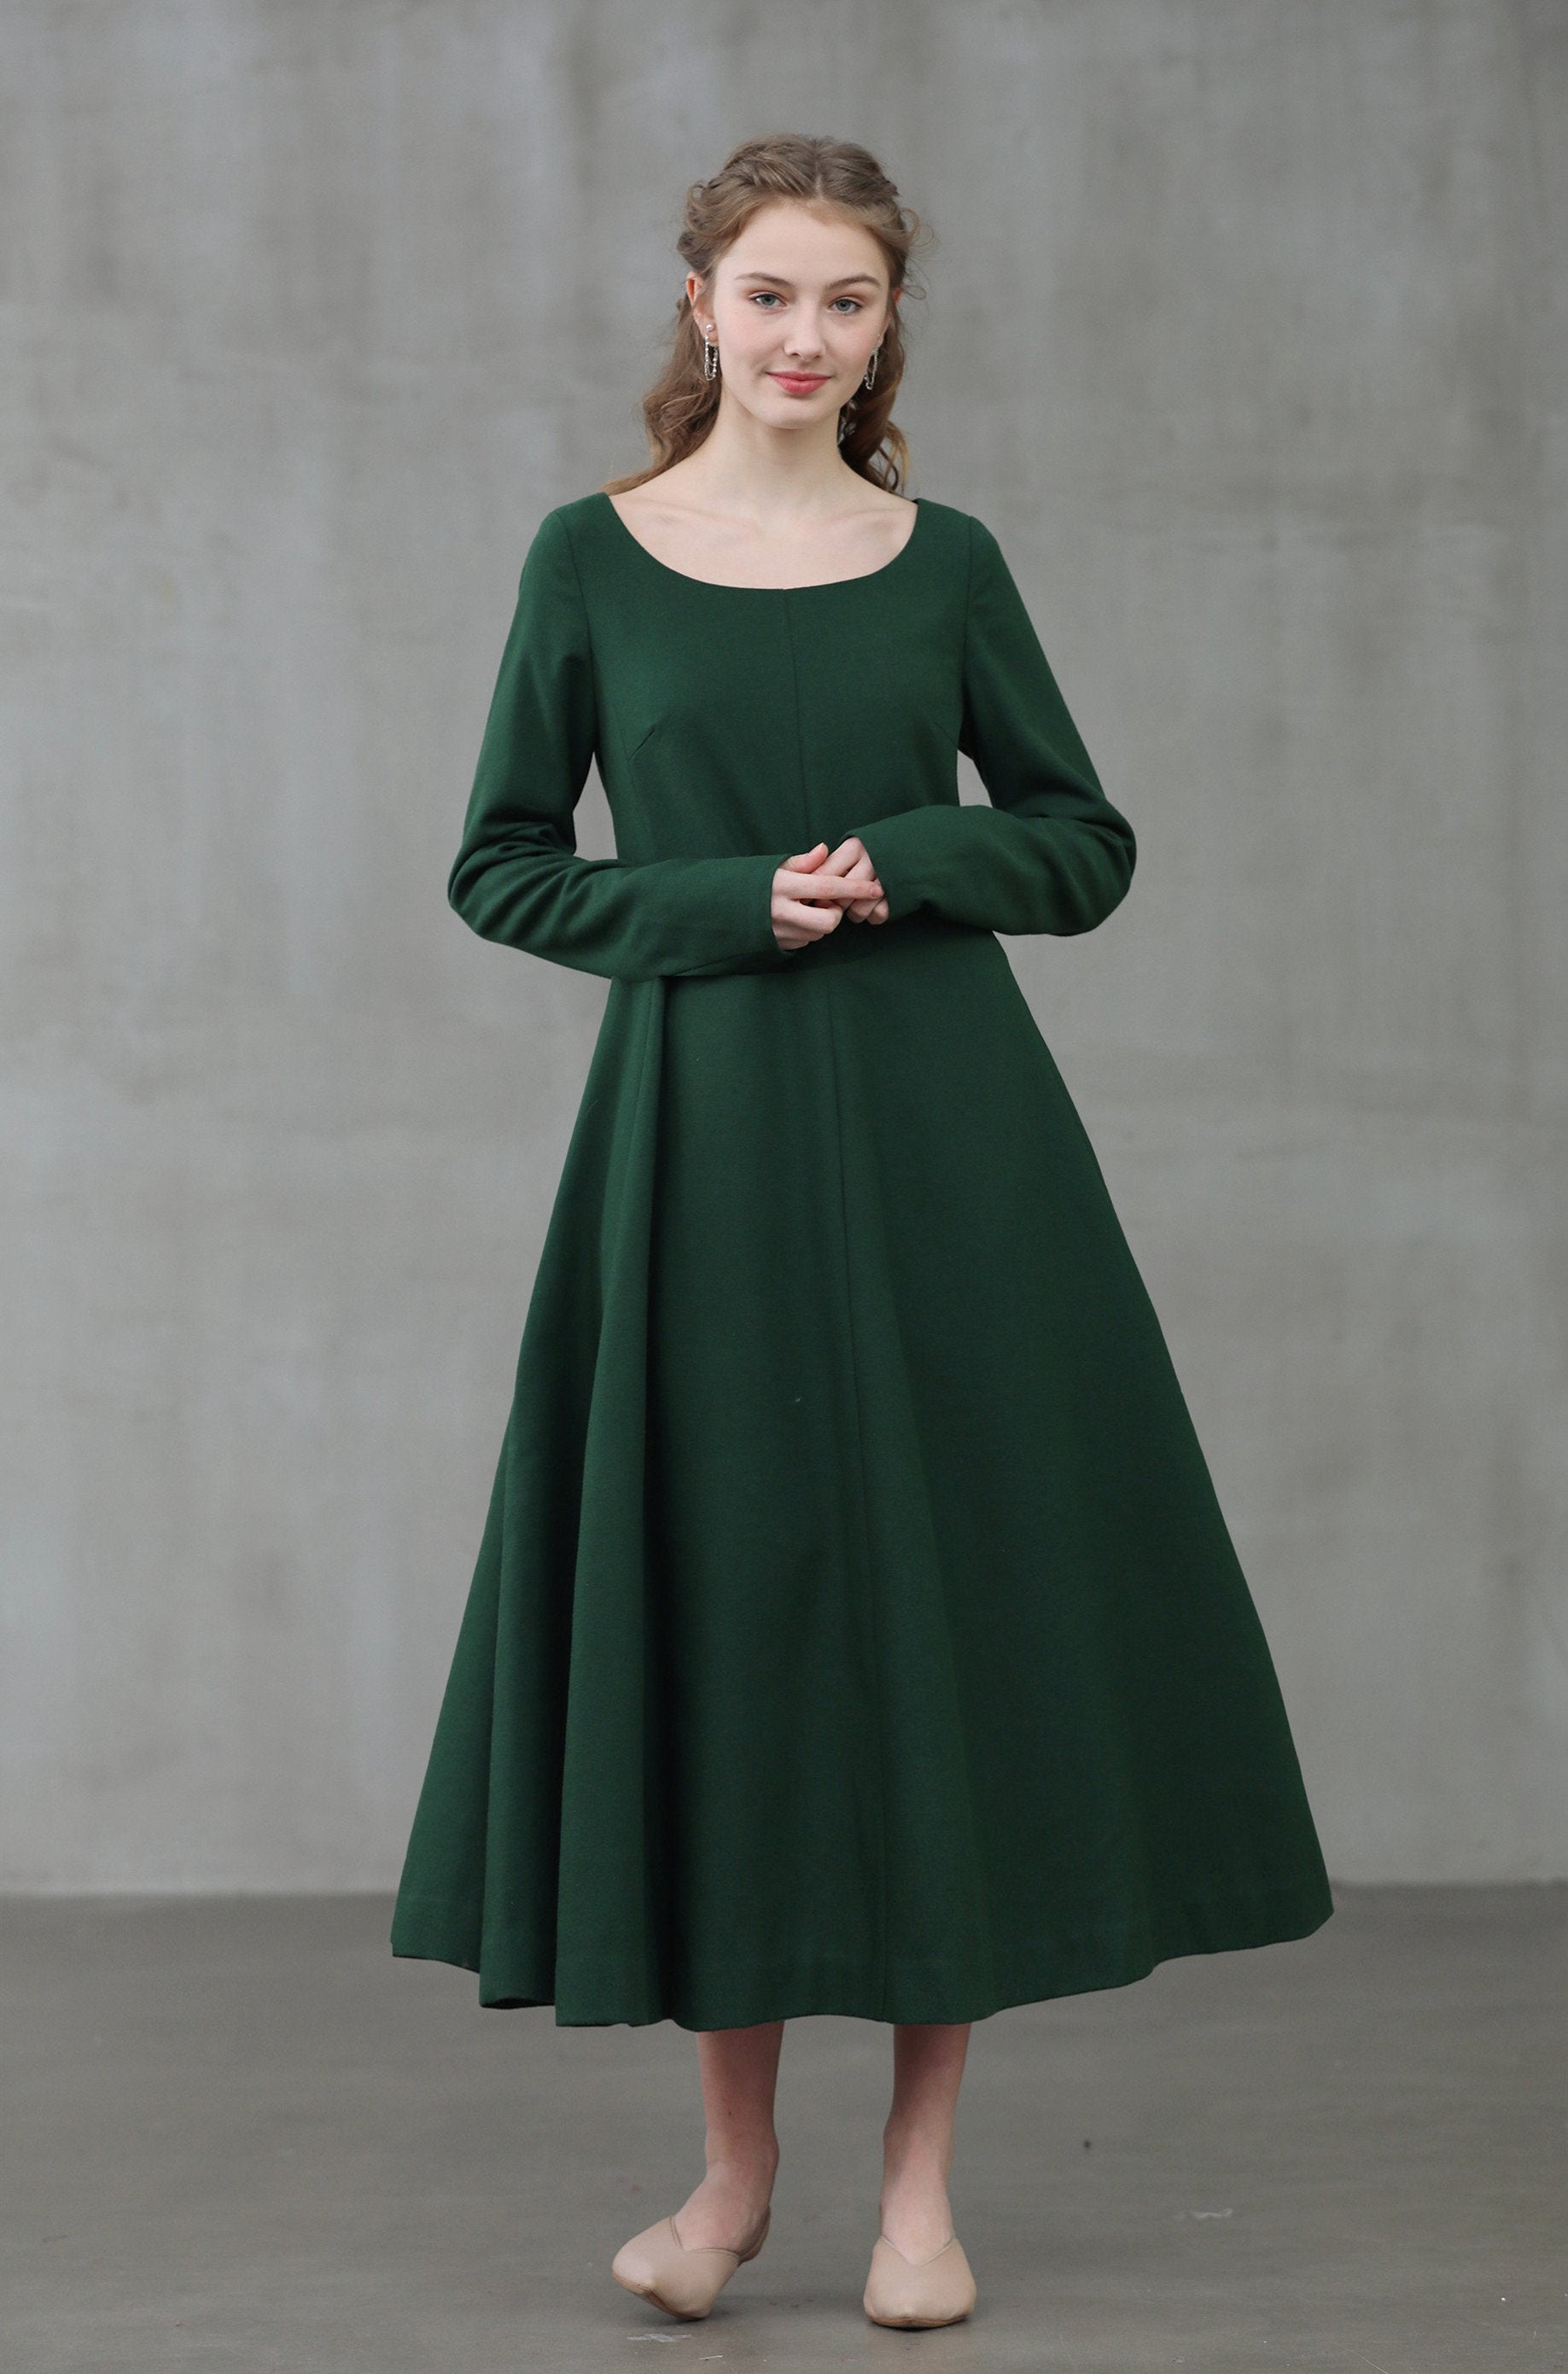 green wool dress